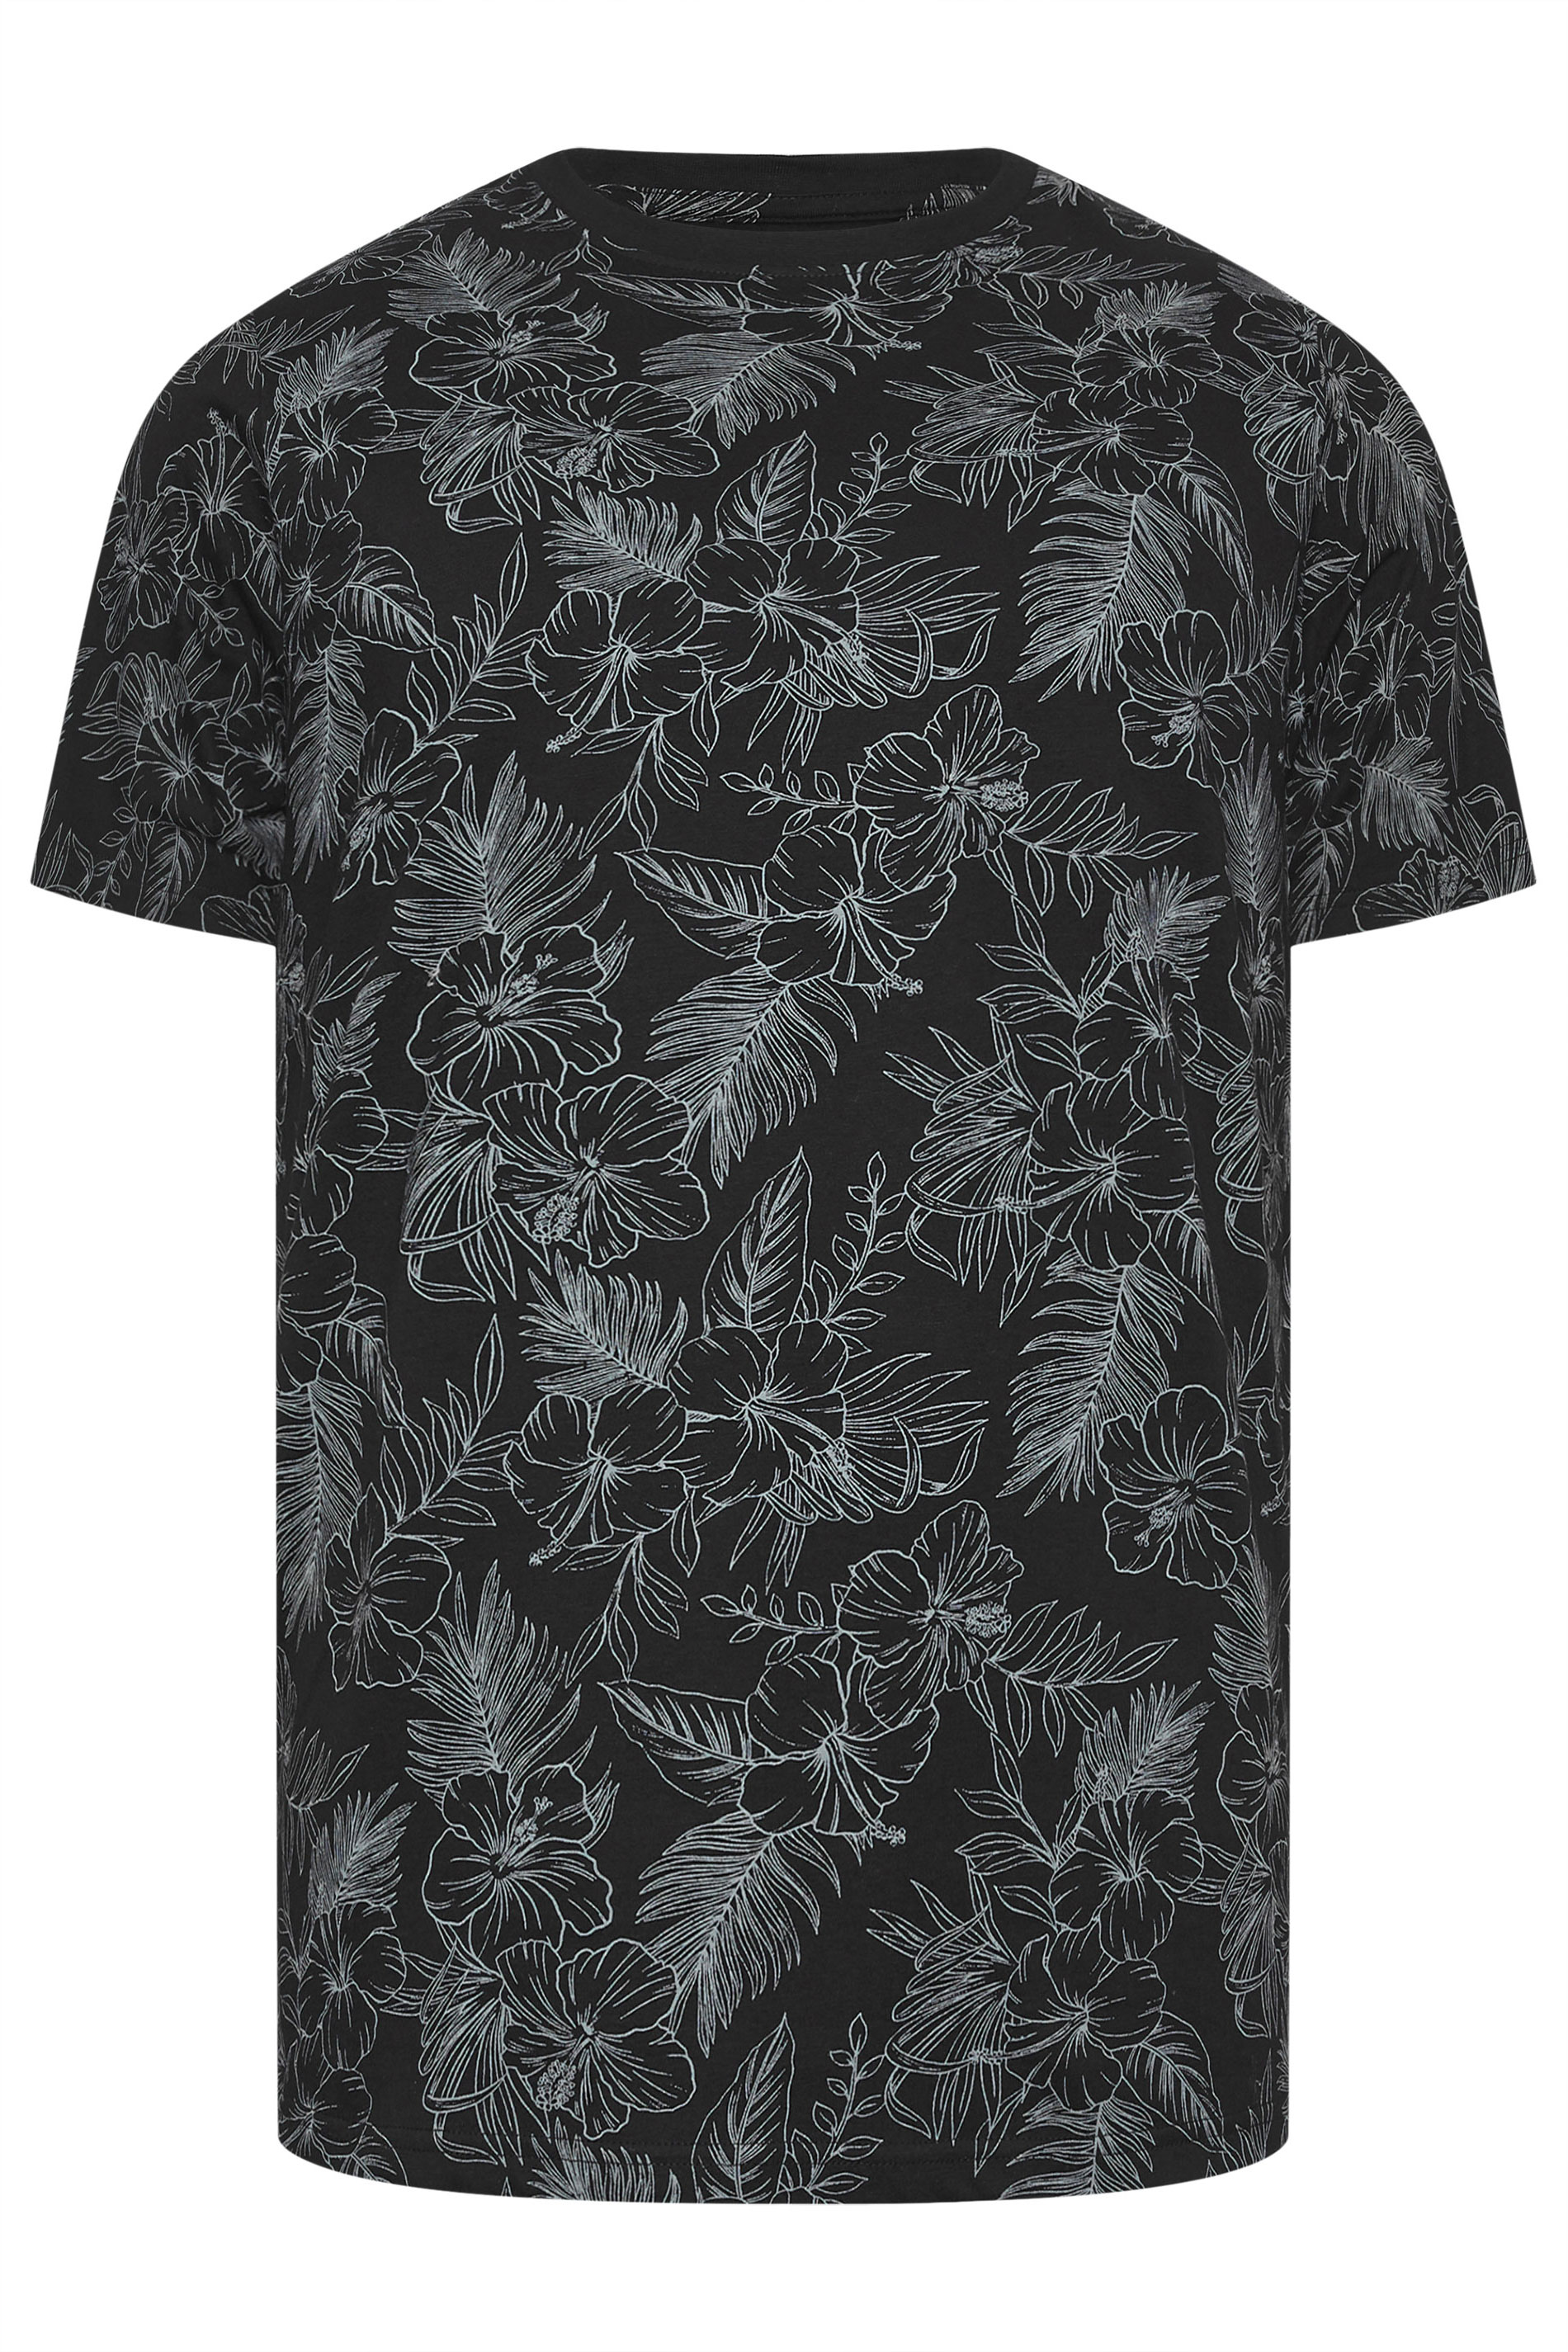 BadRhino Big & Tall Black Leaf Outline Print Short Sleeve T-Shirt | BadRhino 3